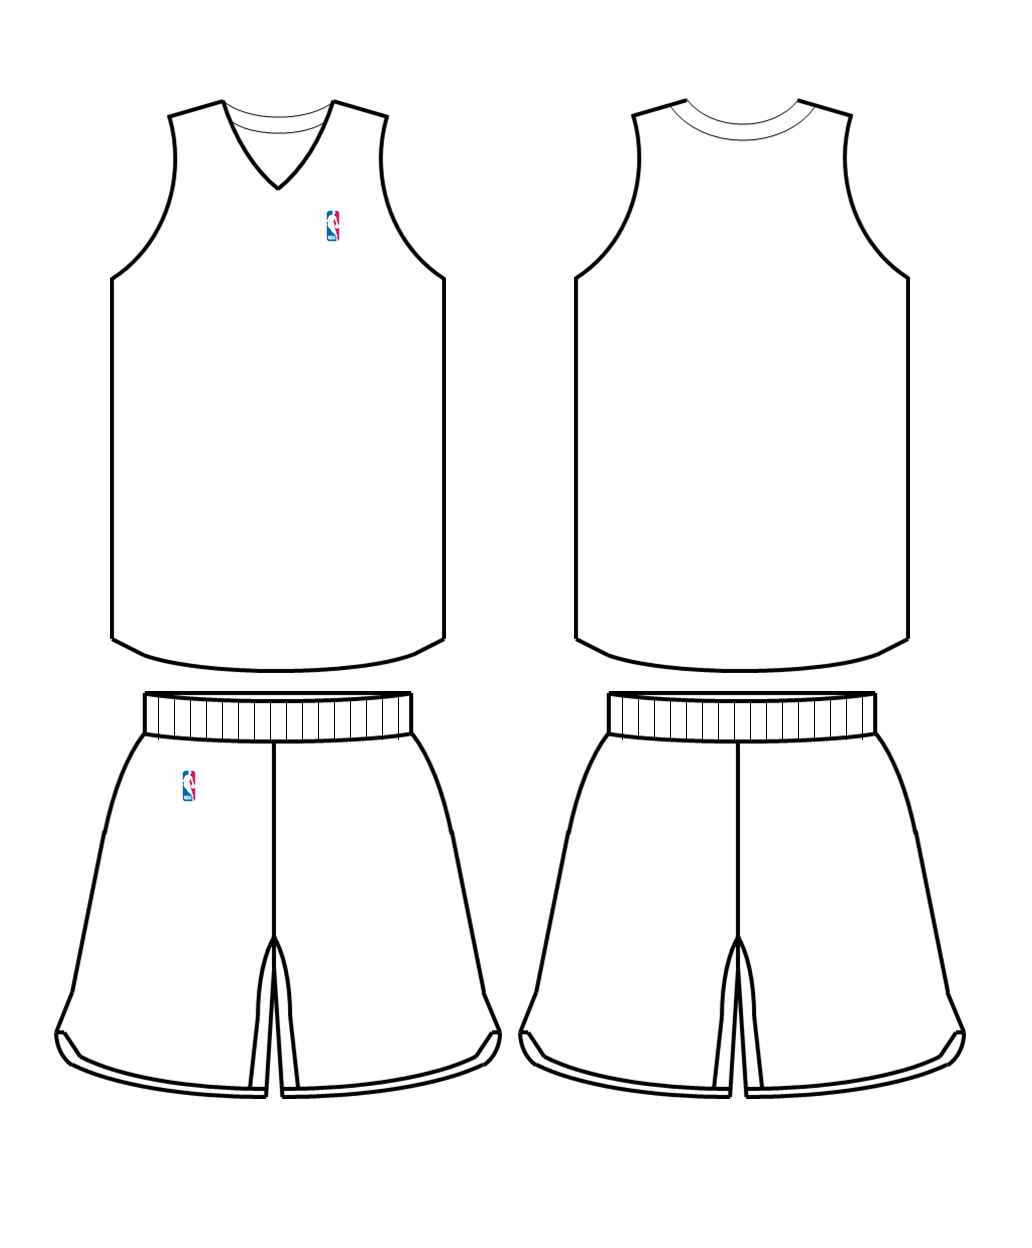 Free Blank Basketball Jersey, Download Free Blank Basketball Within Blank Basketball Uniform Template